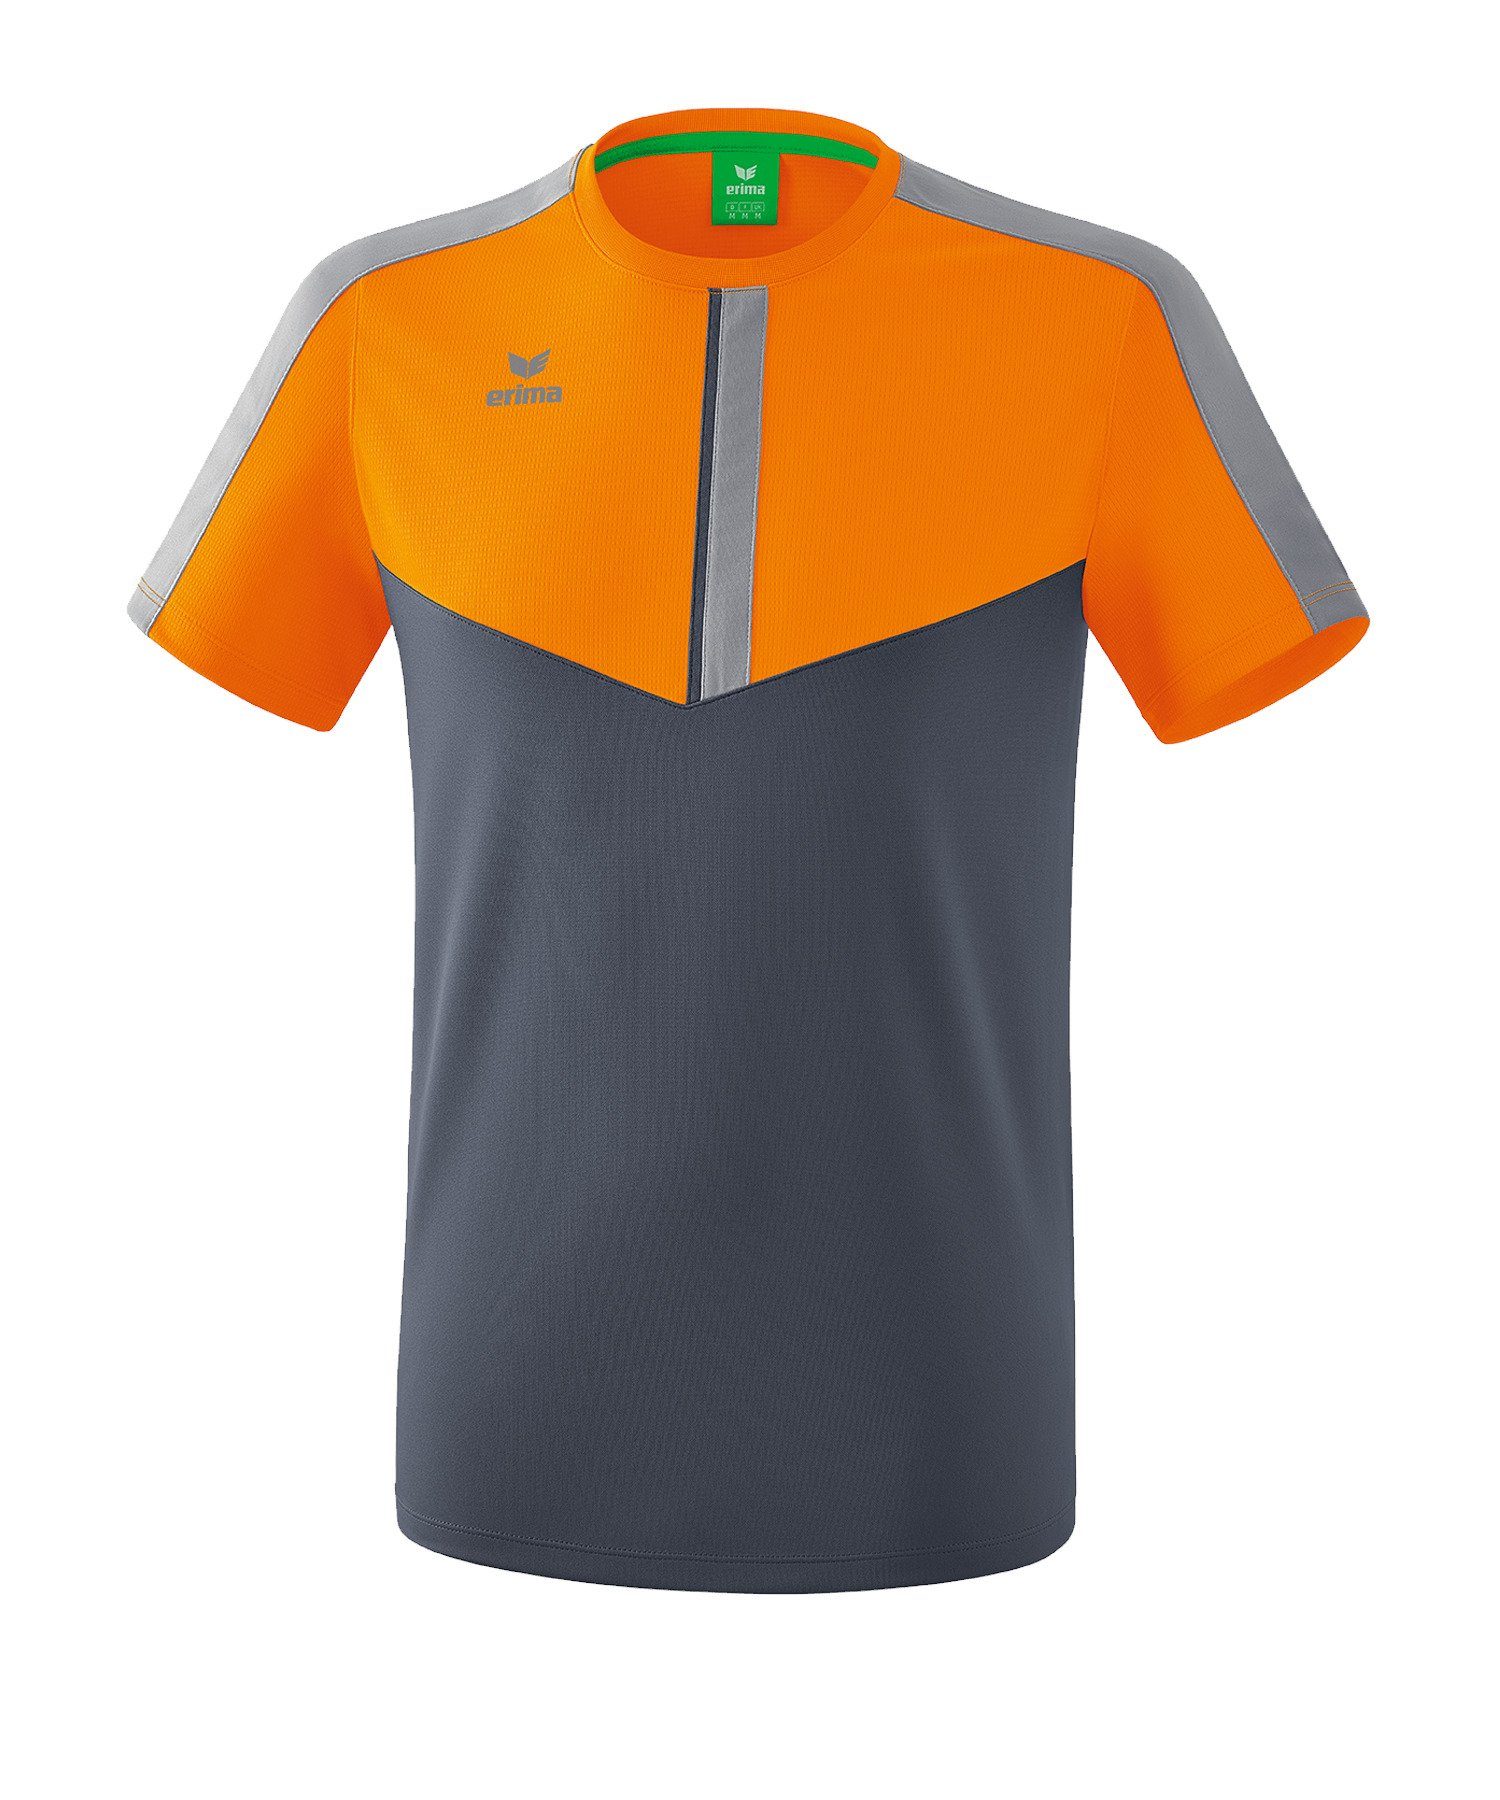 Erima T-Shirt Squad orangegrau default T-Shirt